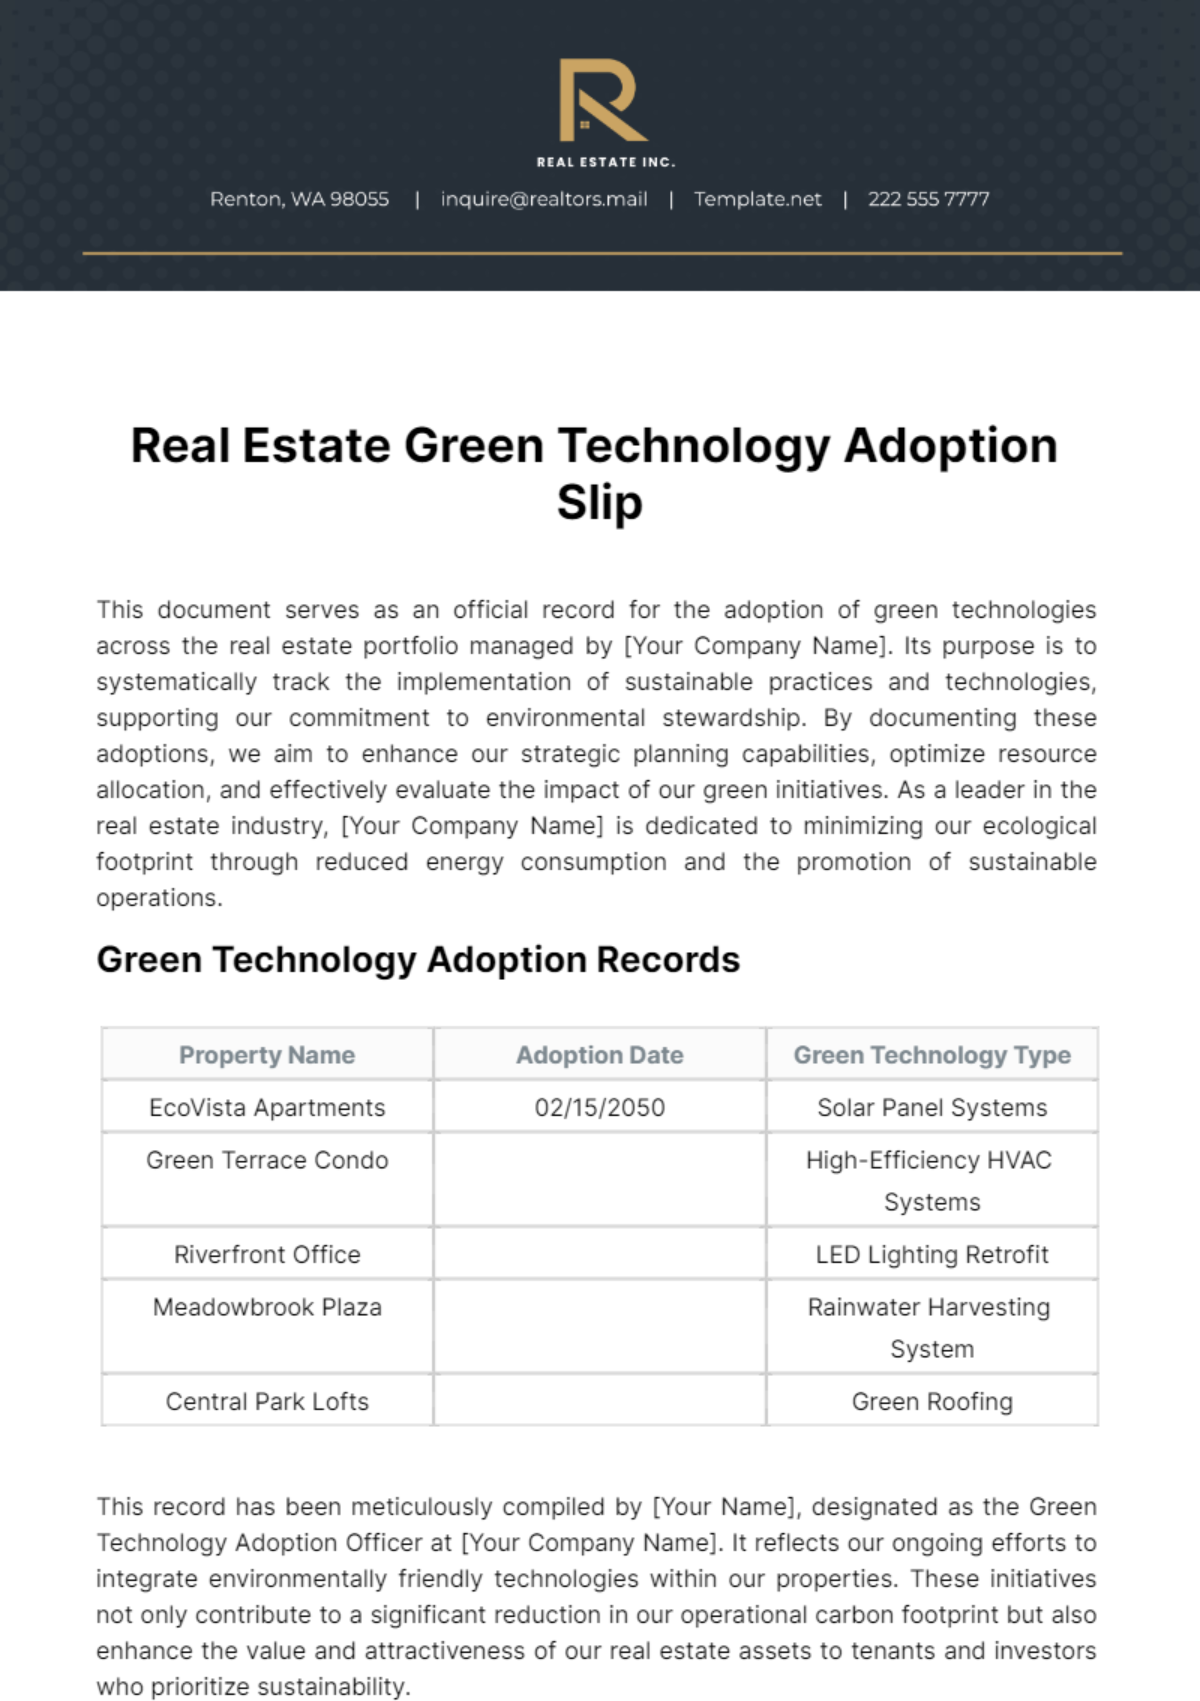 Real Estate Green Technology Adoption Slip Template